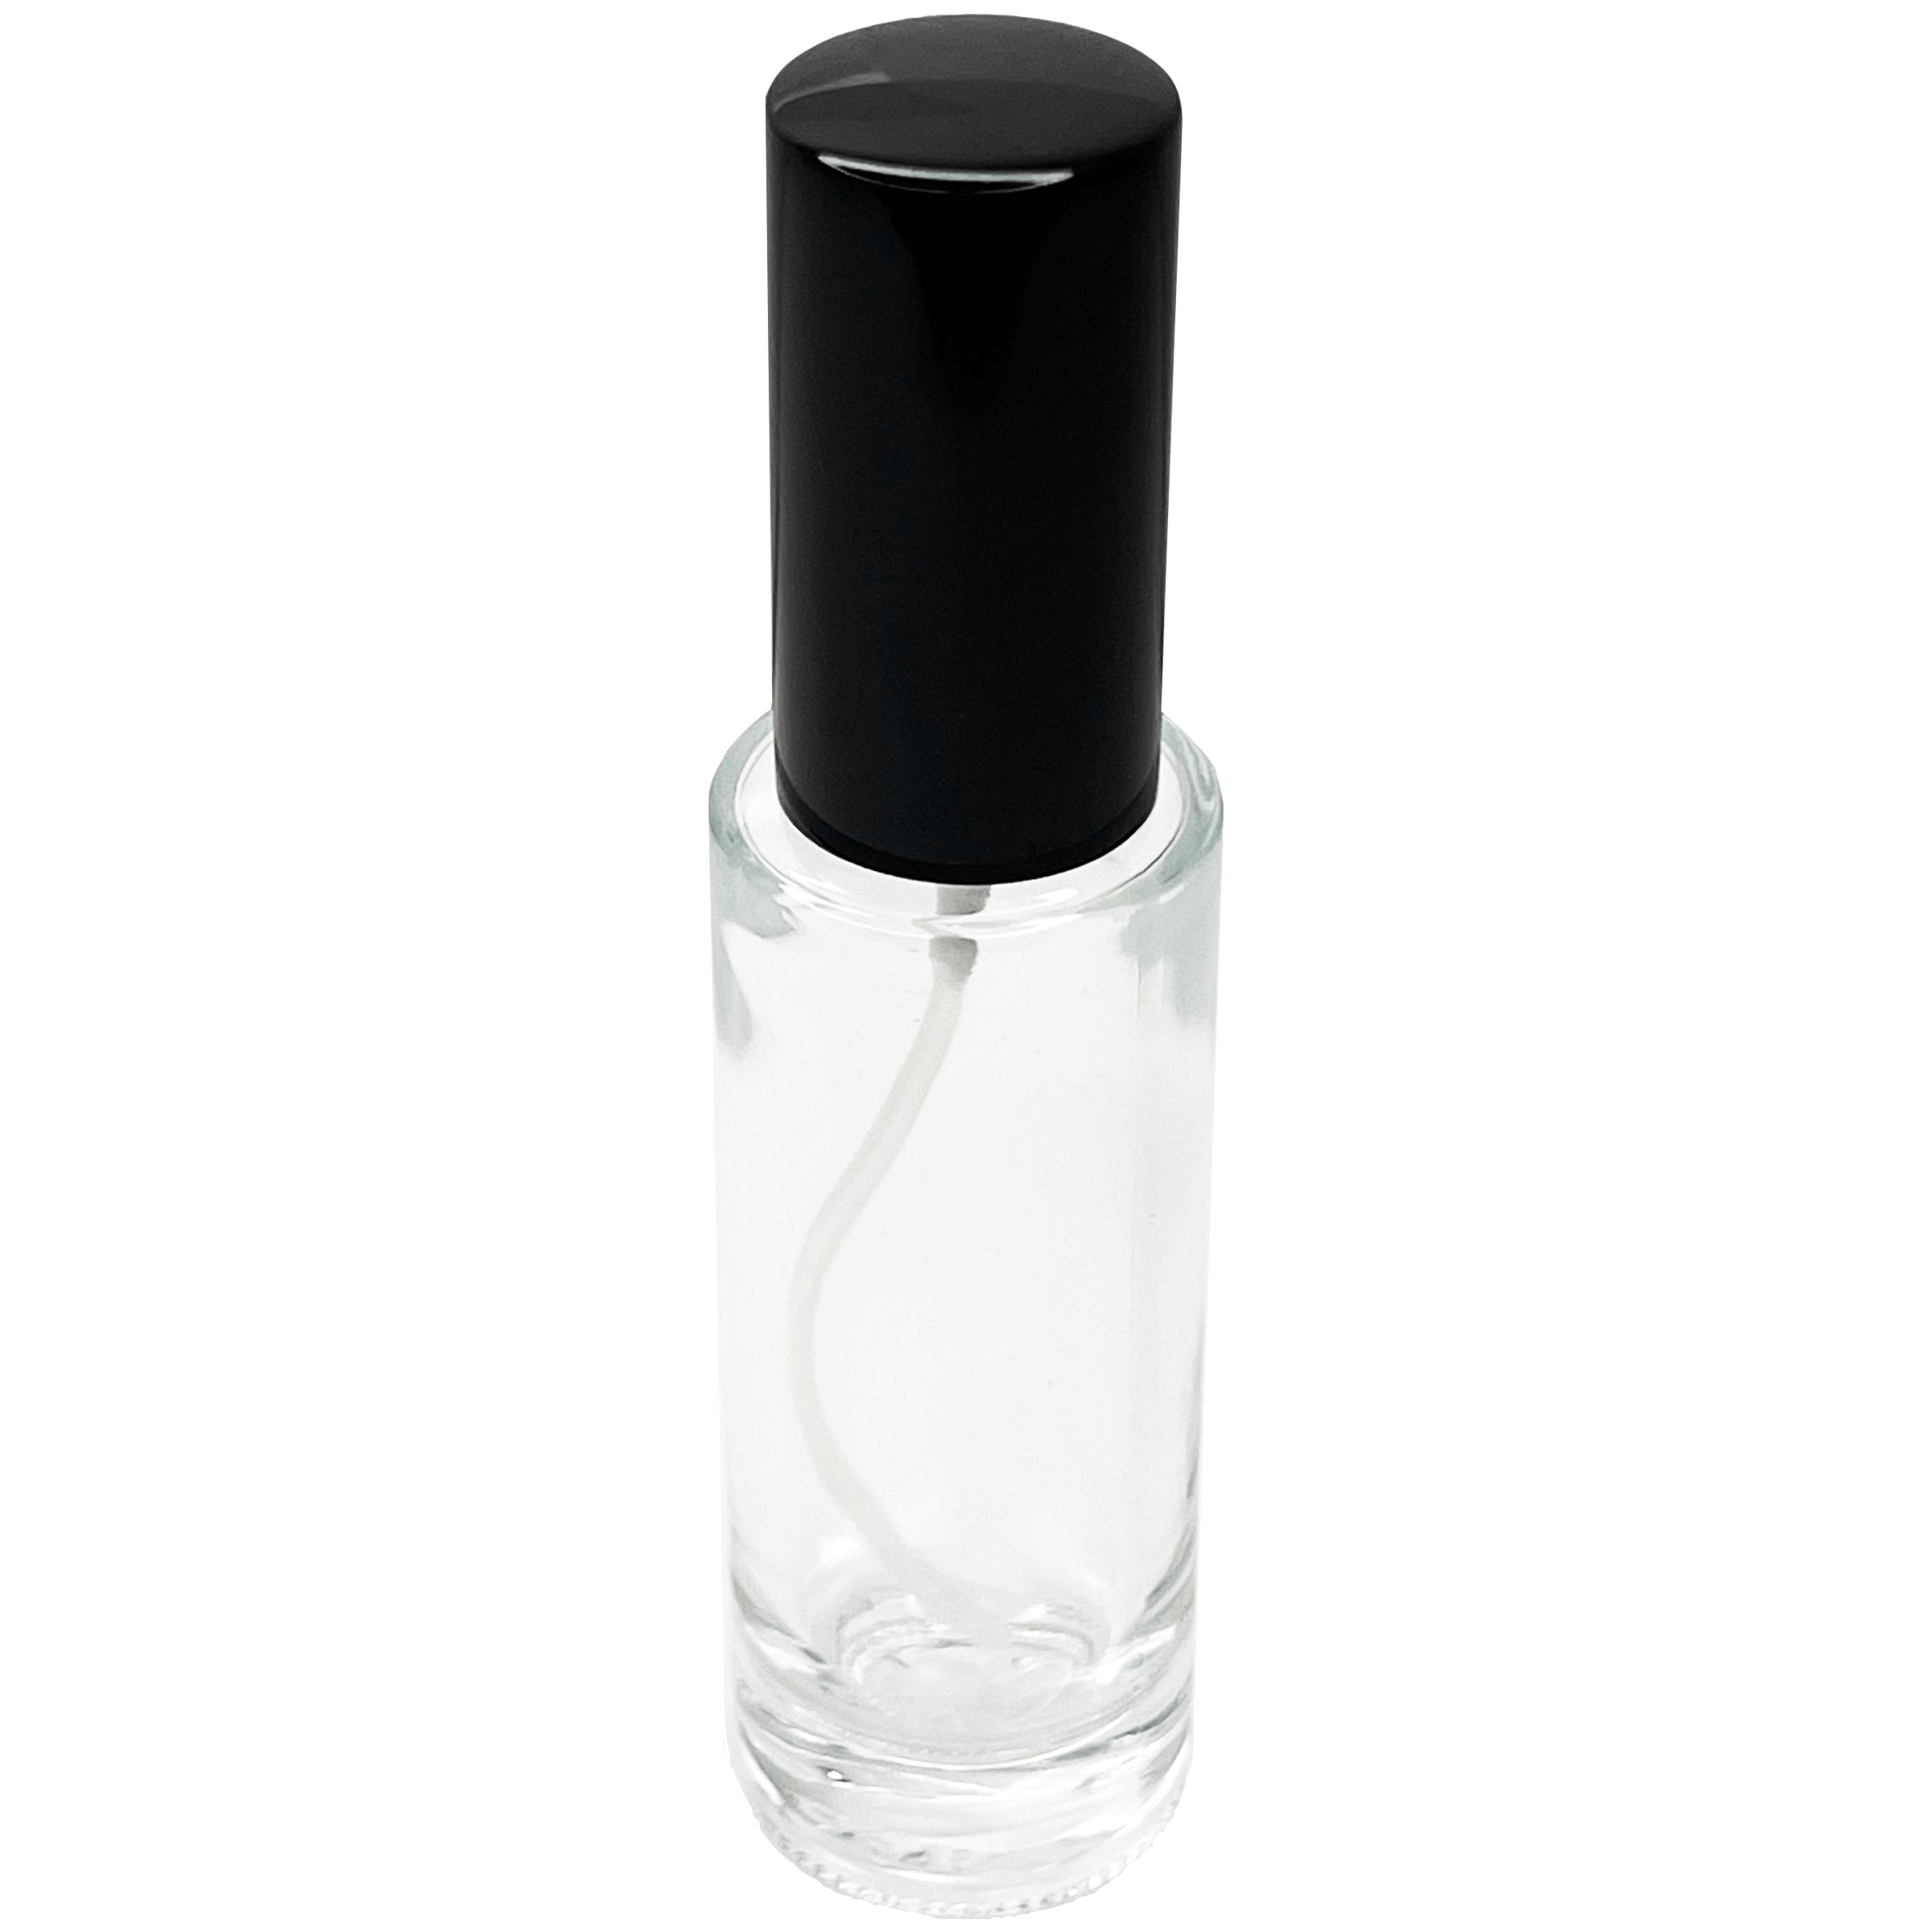 30ml 1oz thick glass cylinder perfume bottles 18mm sprayer